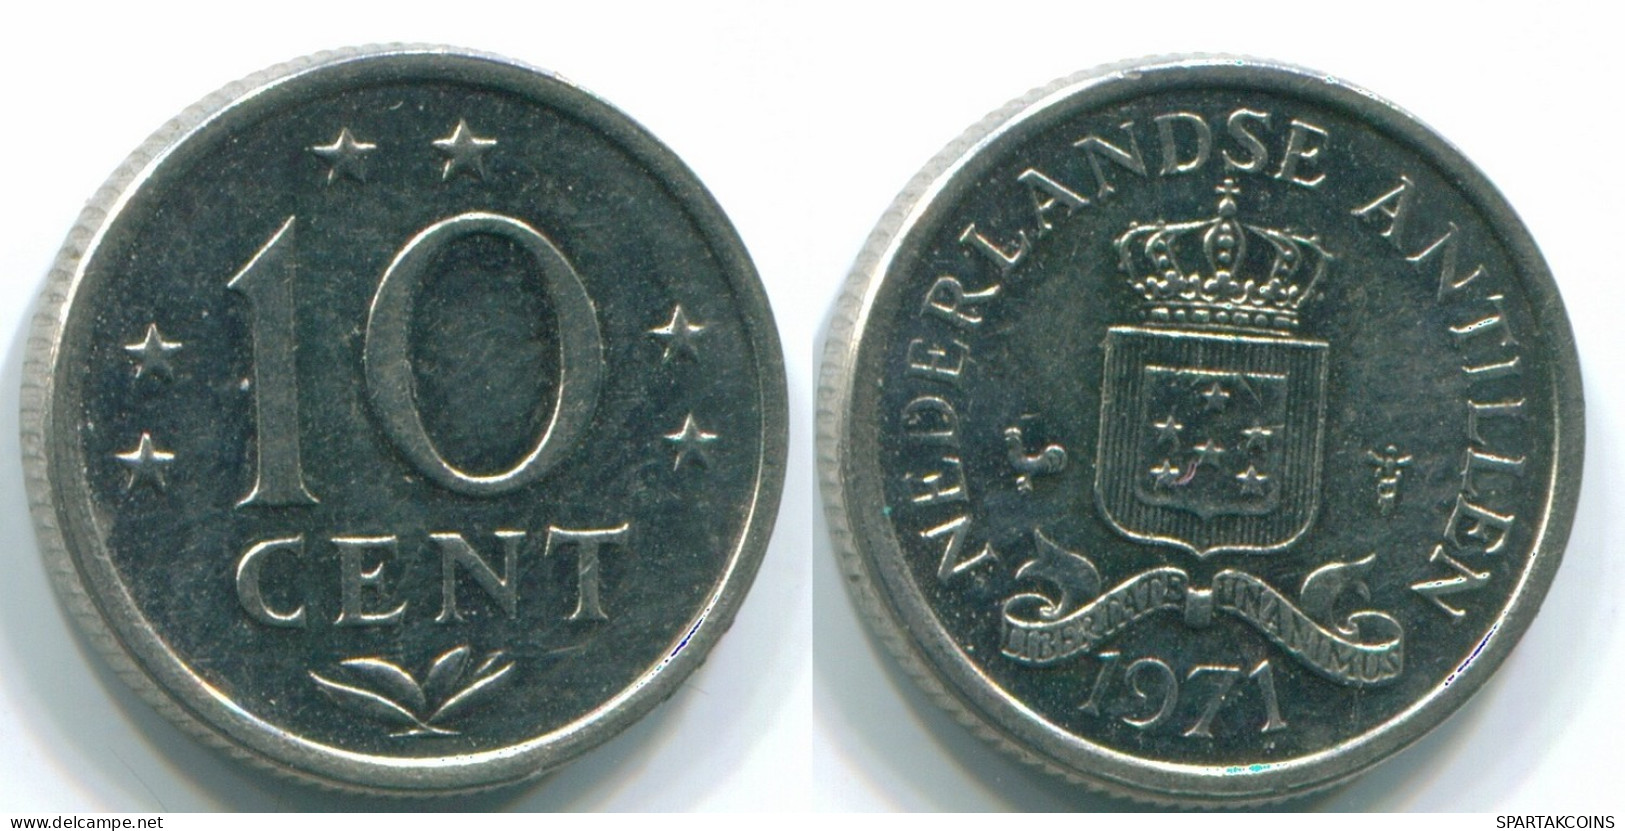 10 CENTS 1971 NETHERLANDS ANTILLES Nickel Colonial Coin #S13460.U.A - Antilles Néerlandaises